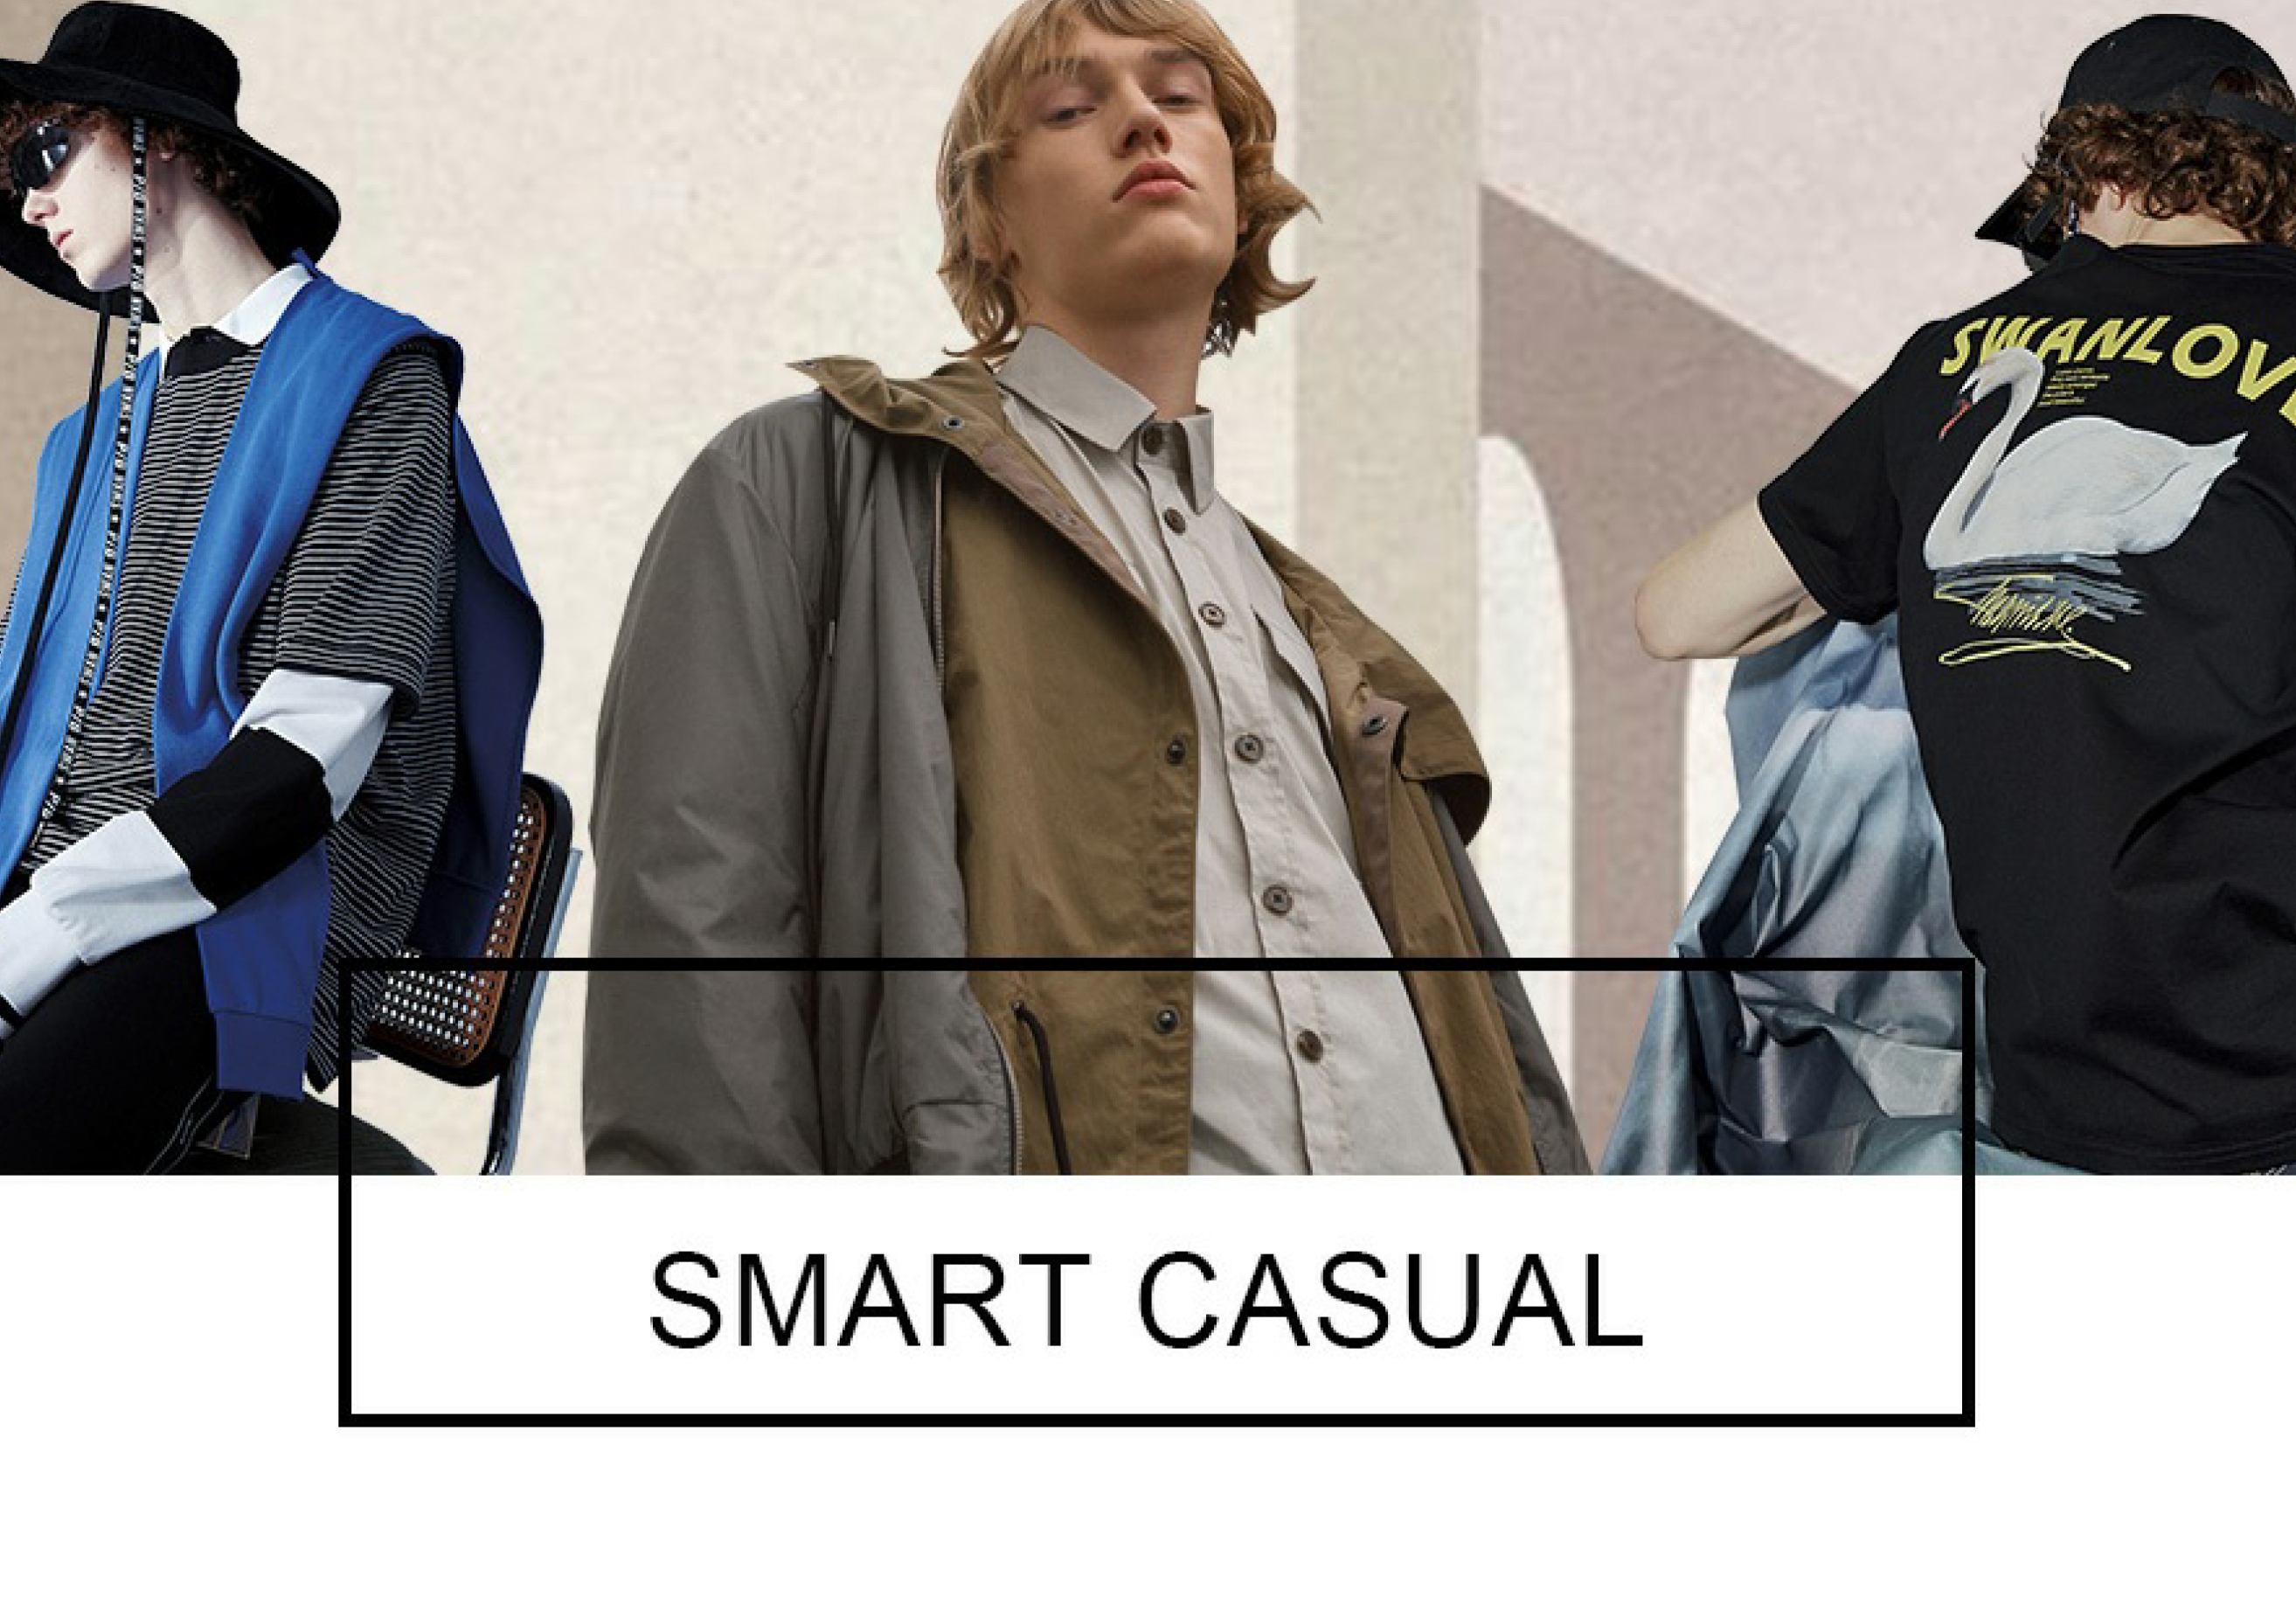 Smart Leisure -- Comprehensive Analysis of S/S 2019 Menswear Brands